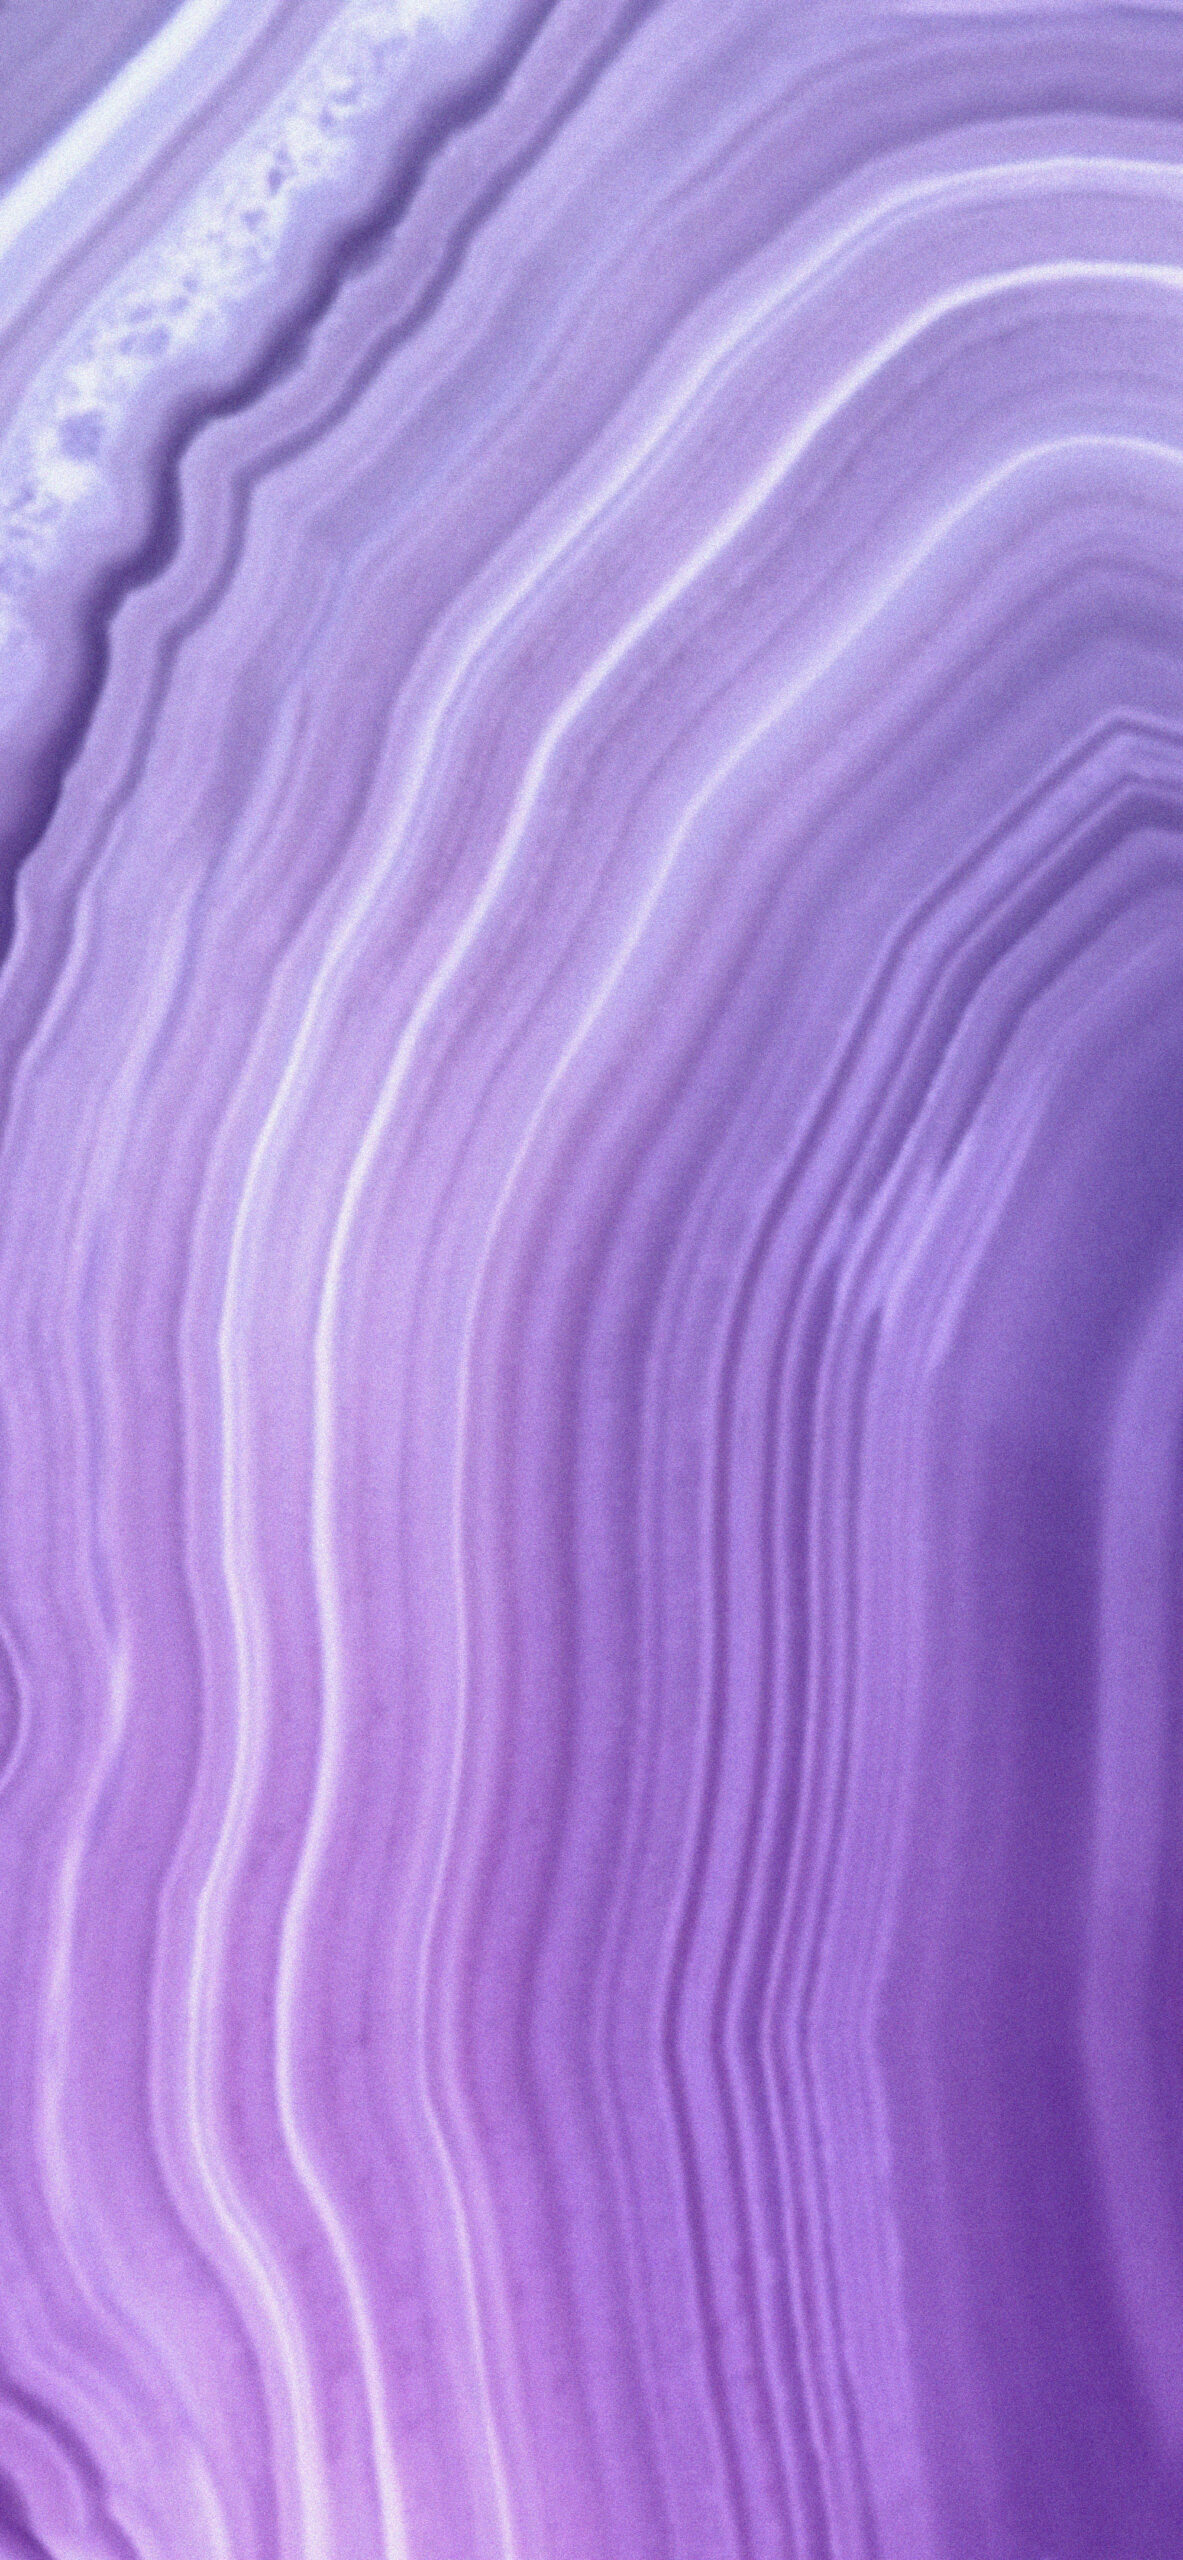 Light Lavender Aesthetic Wallpapers - Aesthetic Purple Wallpapers